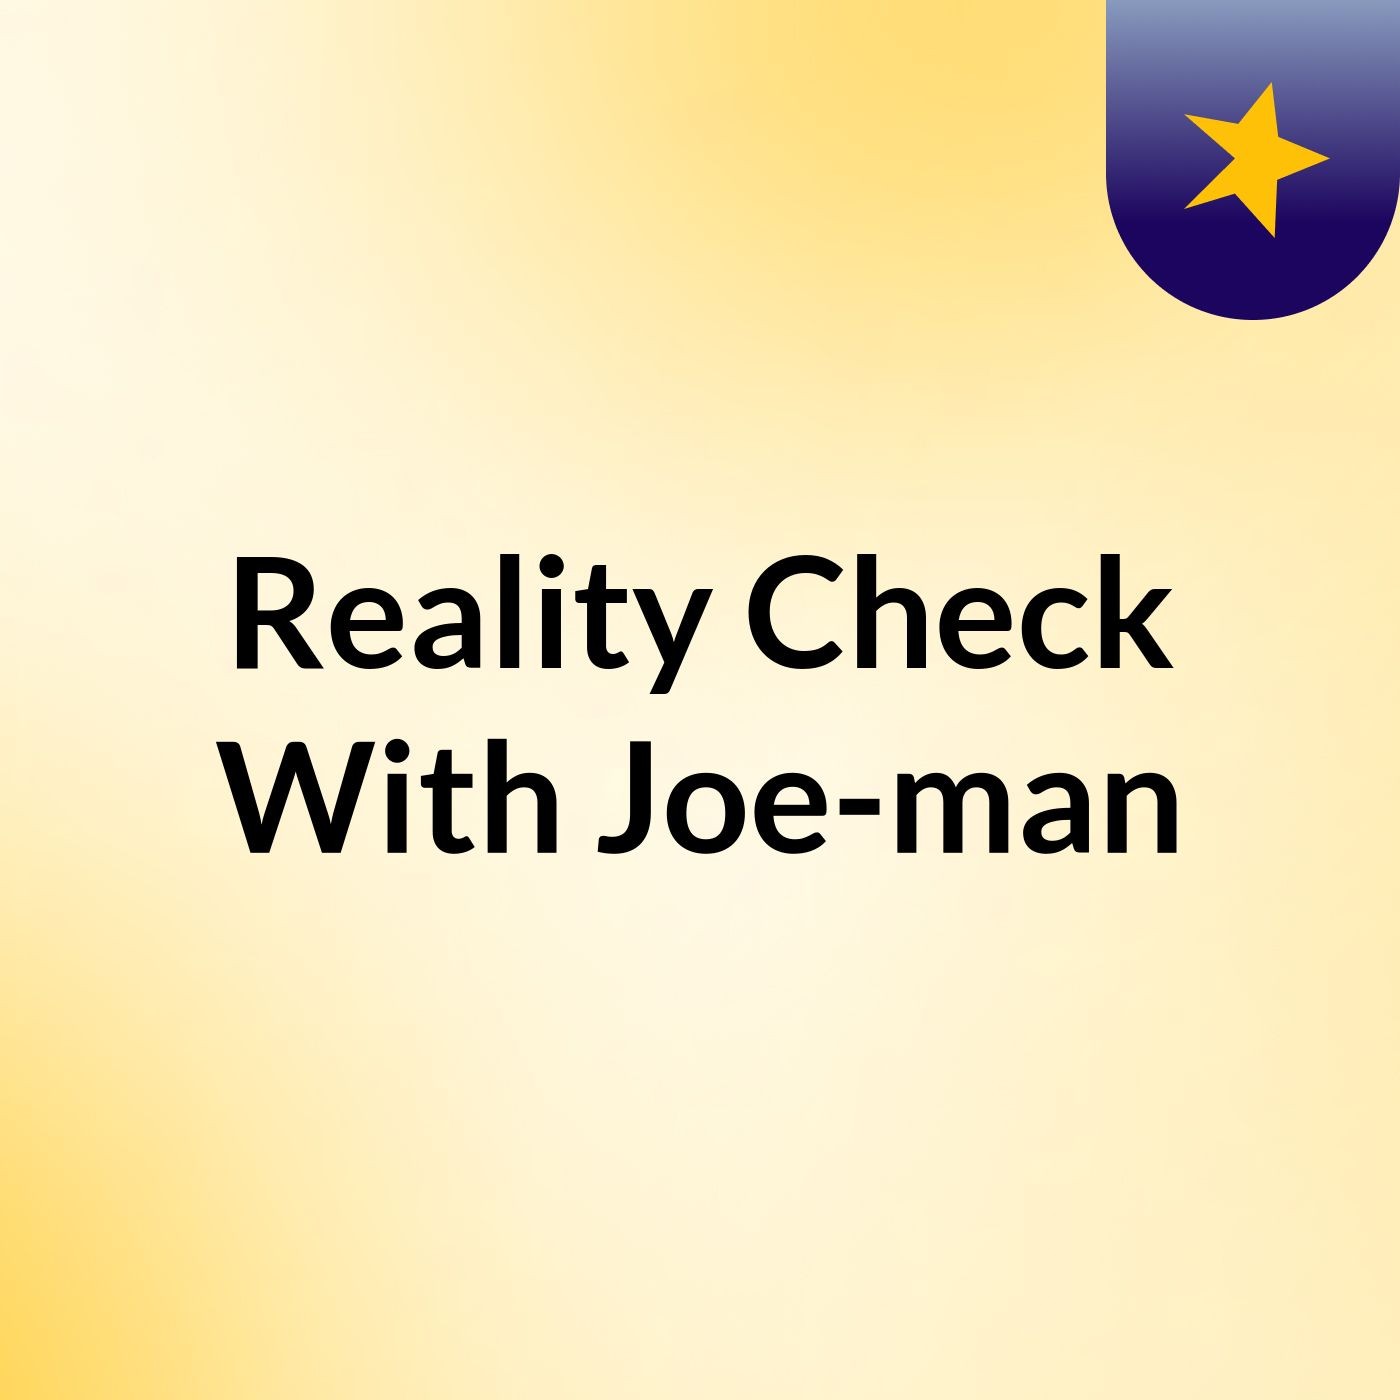 Reality Check With Joe-man